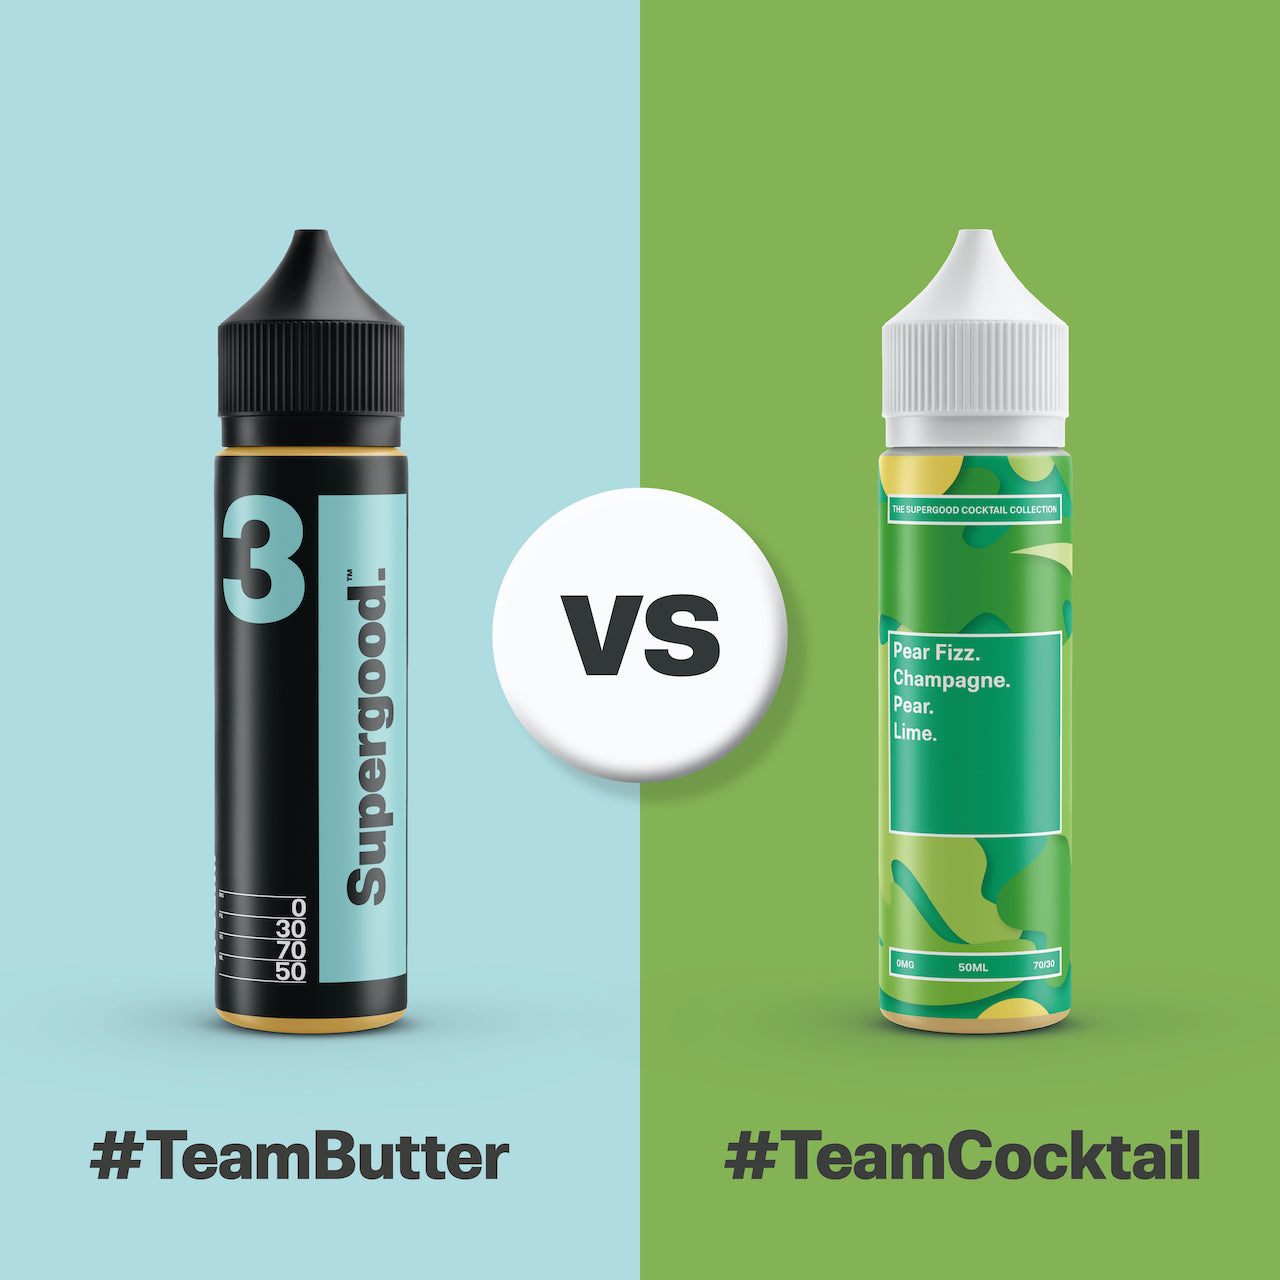 #TeamButter Or #TeamCocktail?